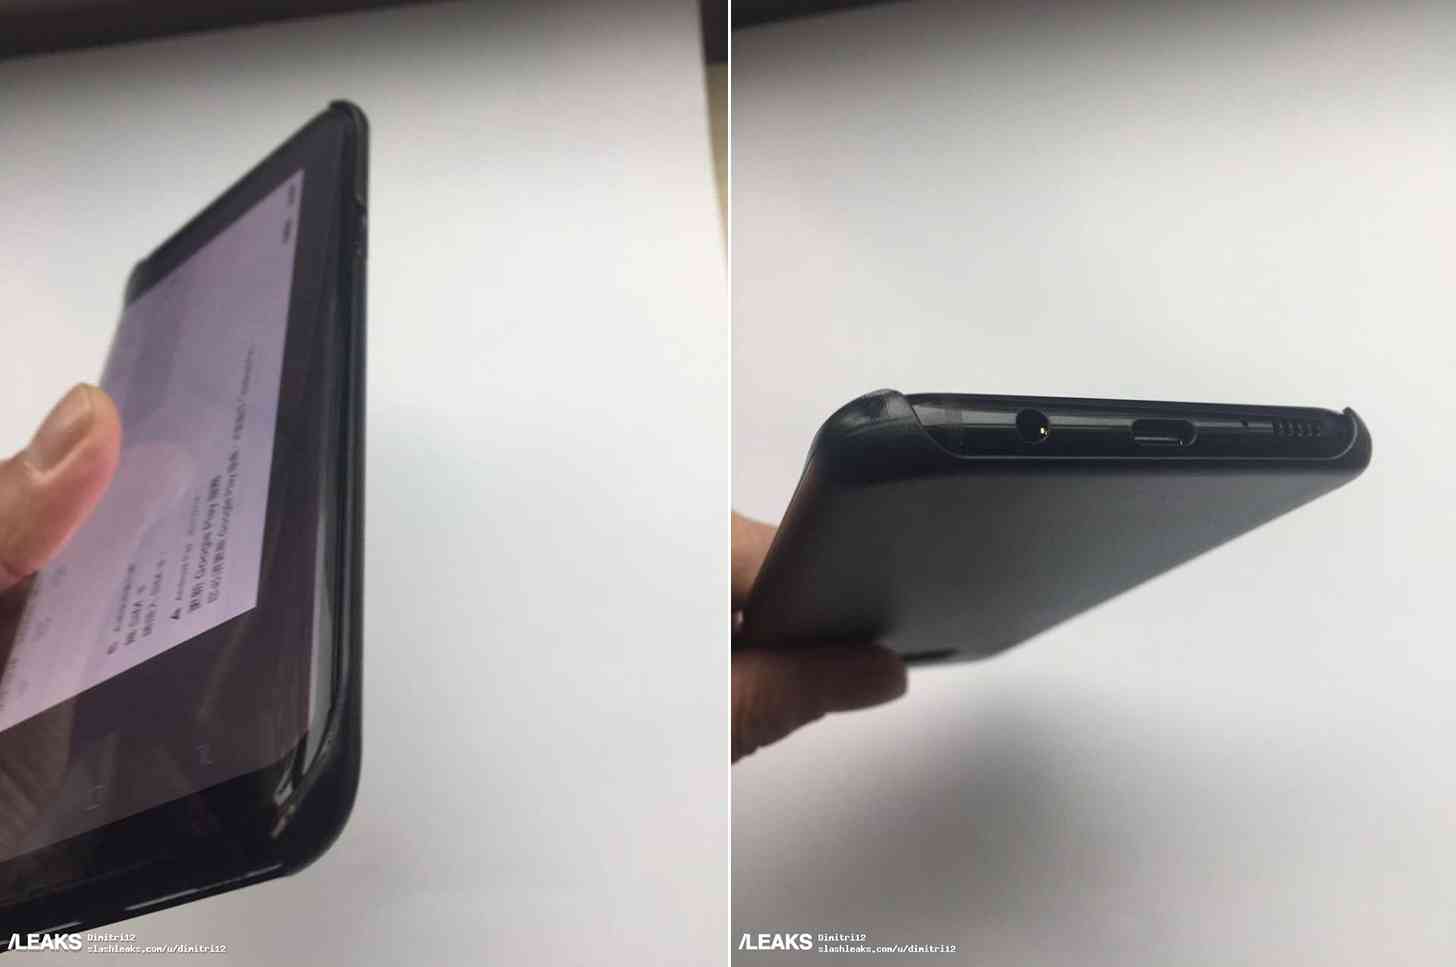 Samsung Galaxy S8, Galaxy S8+ more photos leak